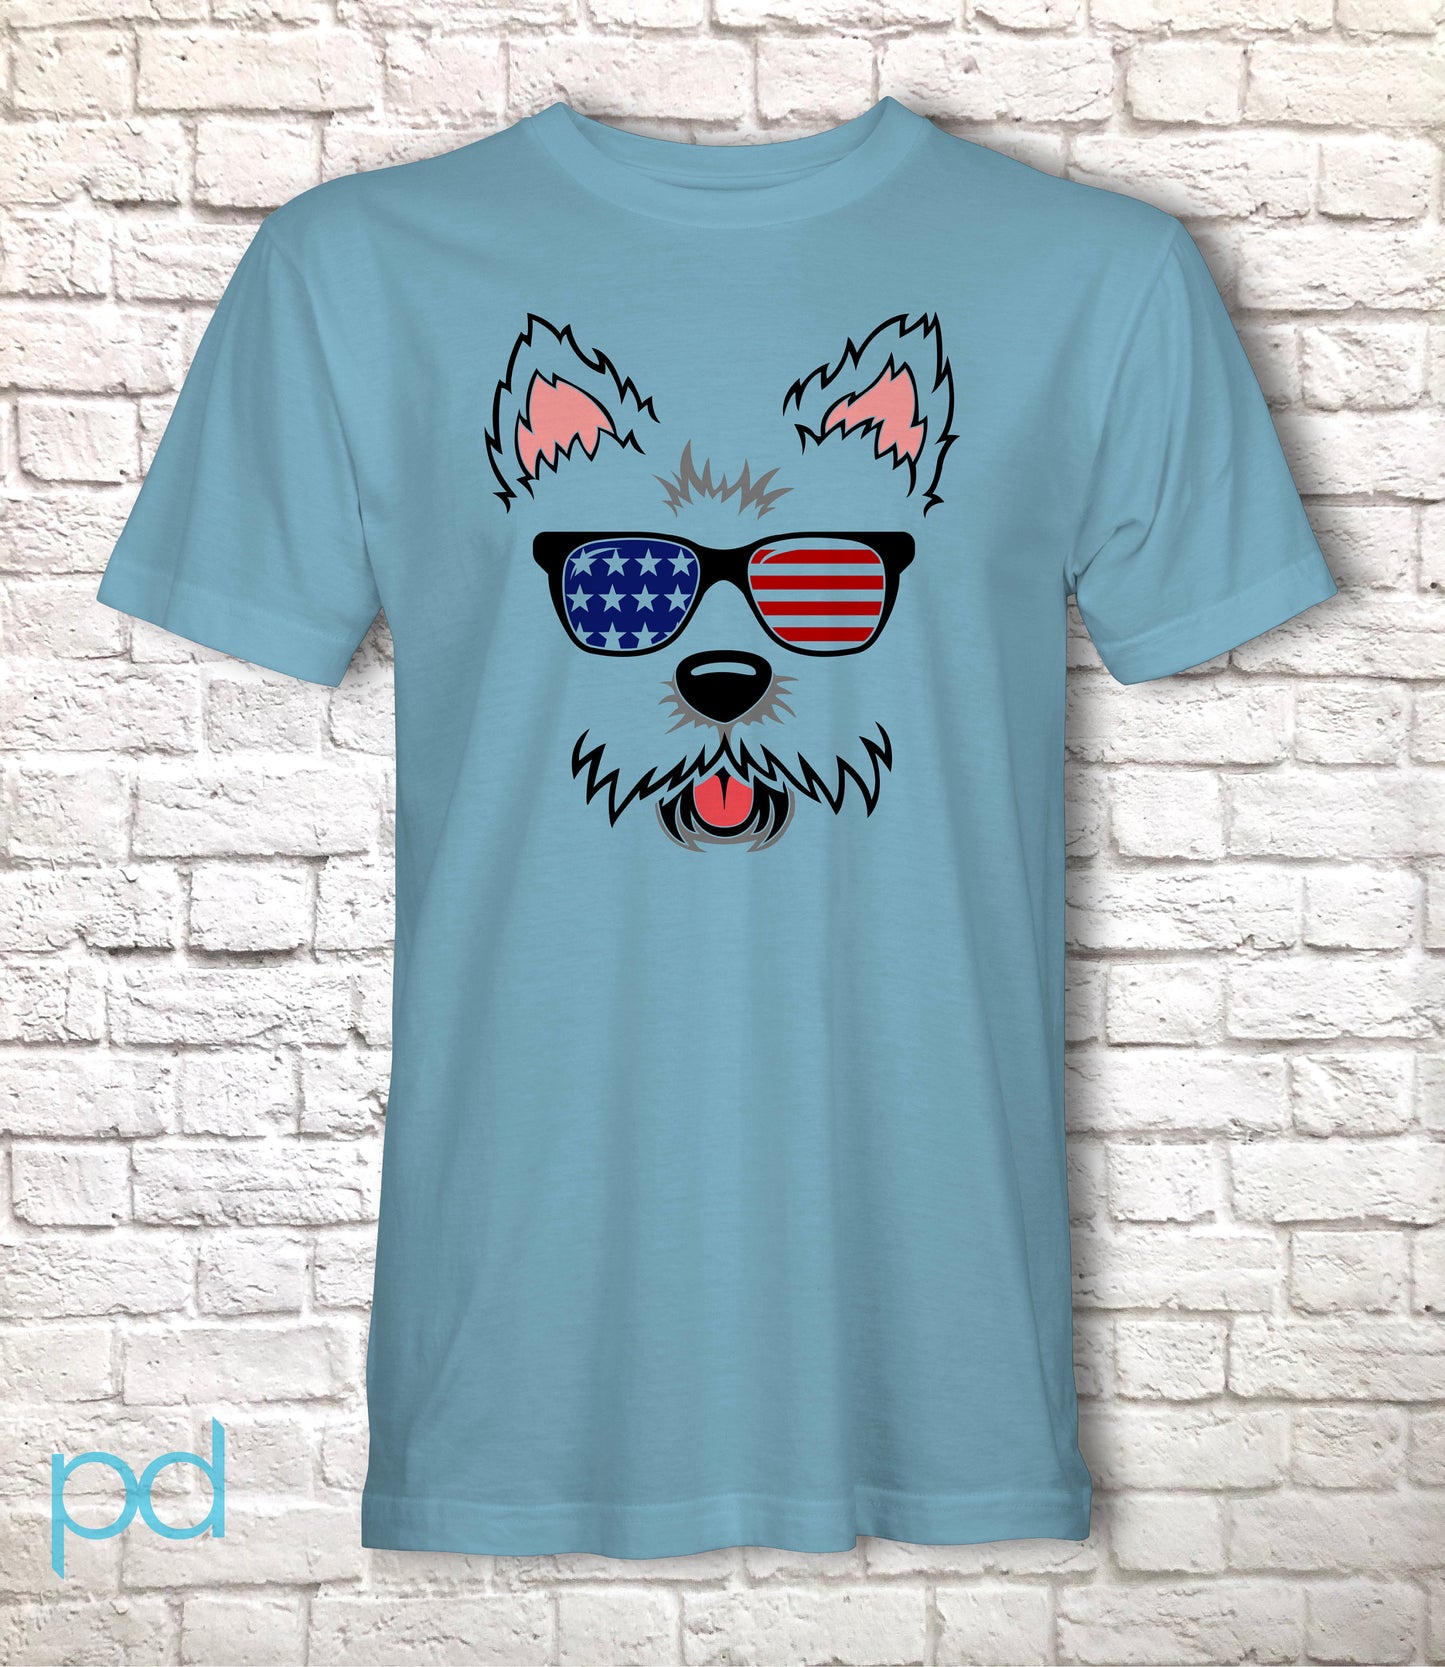 Cute Westie T-Shirt, West Highland Terrier Gift Idea, Adorable Fluffy Dog Face Tee Shirt T Top, USA Stars & Stripes Flag Sunglasses